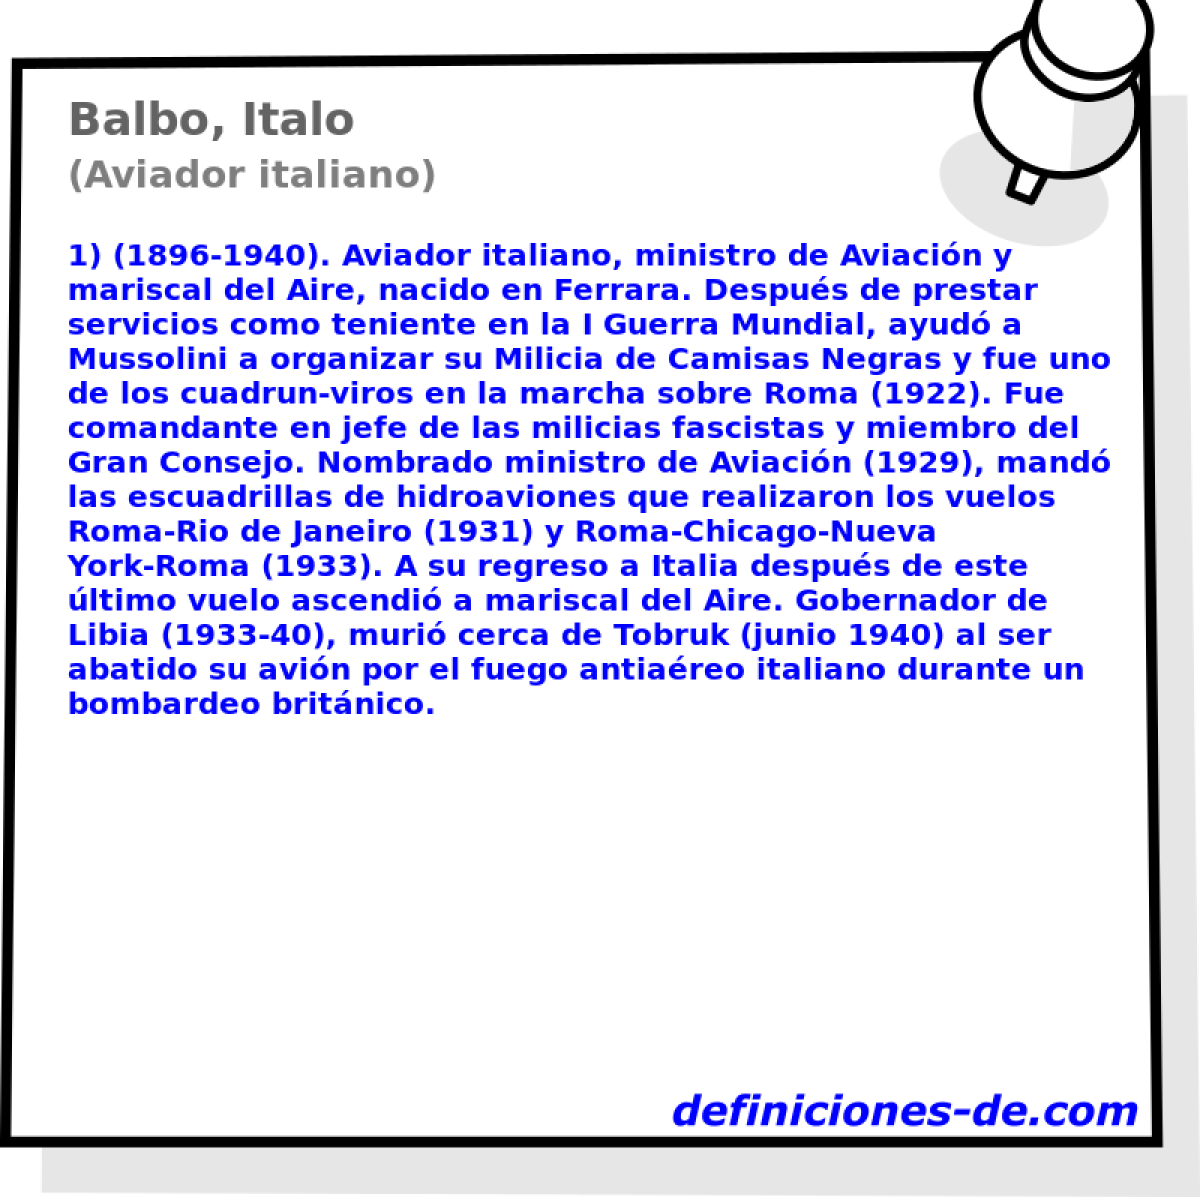 Balbo, Italo (Aviador italiano)